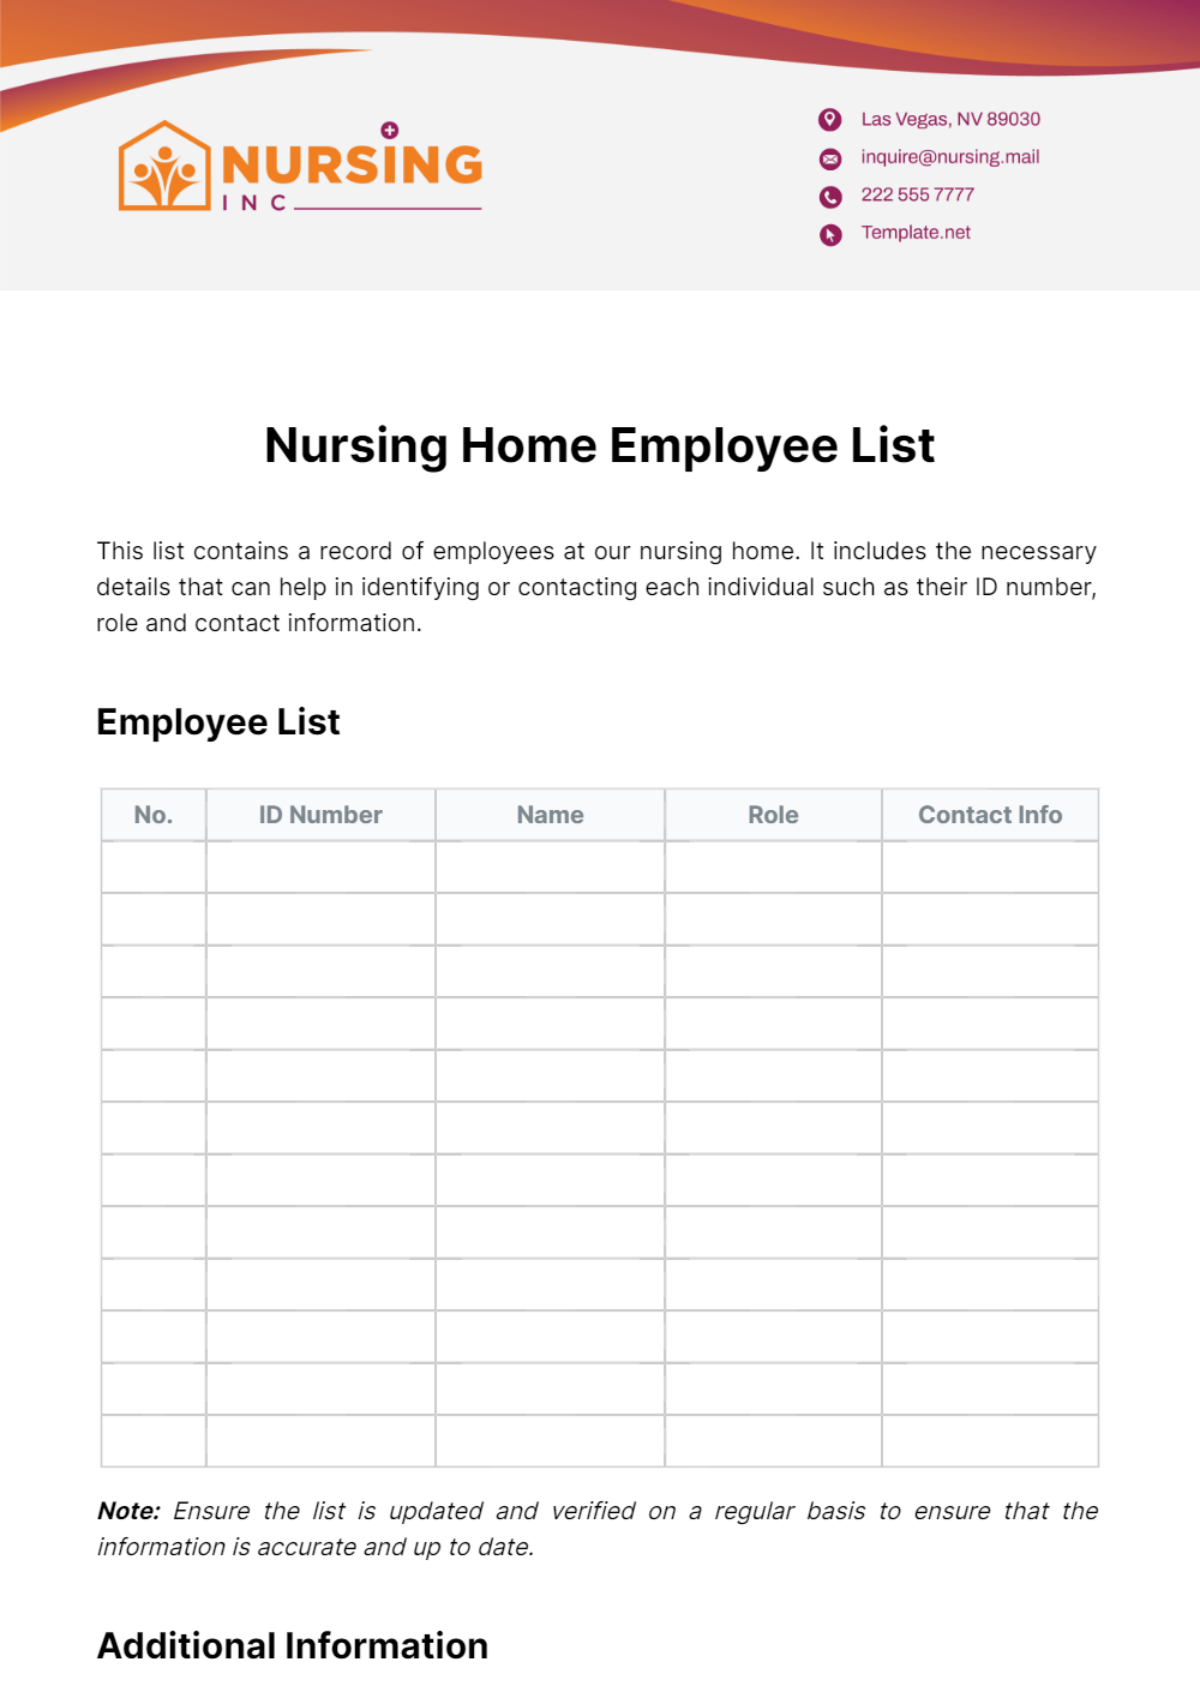 Nursing Home Employee List Template